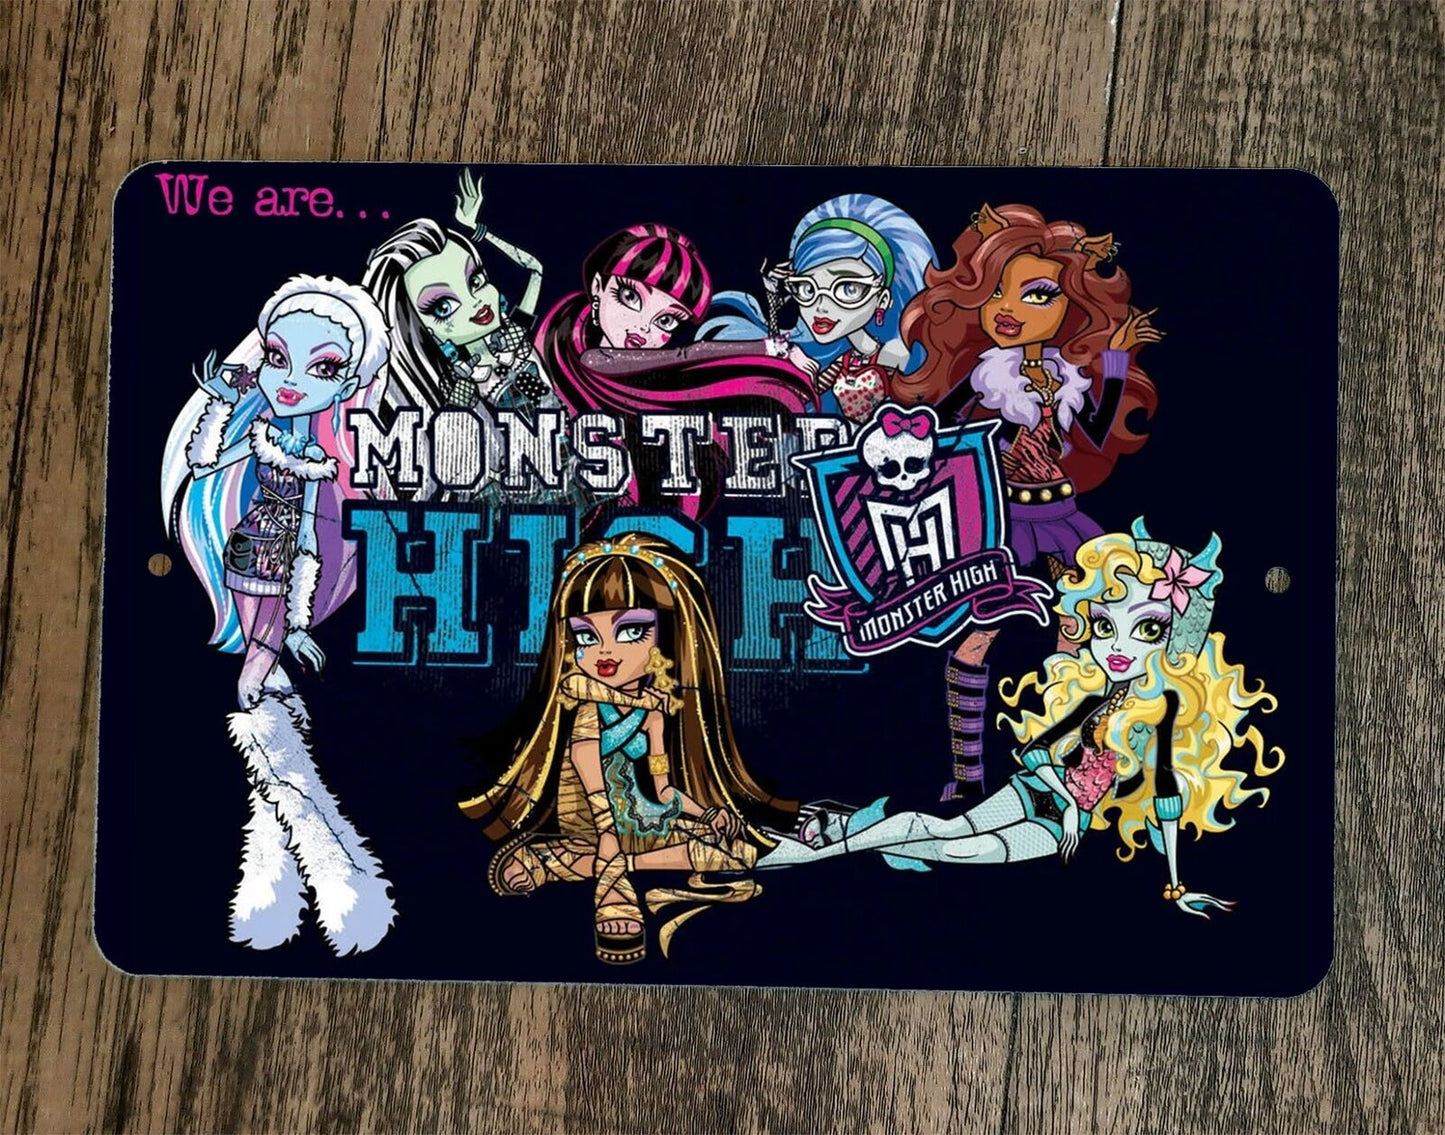 We Are Monster High 8x12 Metal Wall Girls Cartoon Sign